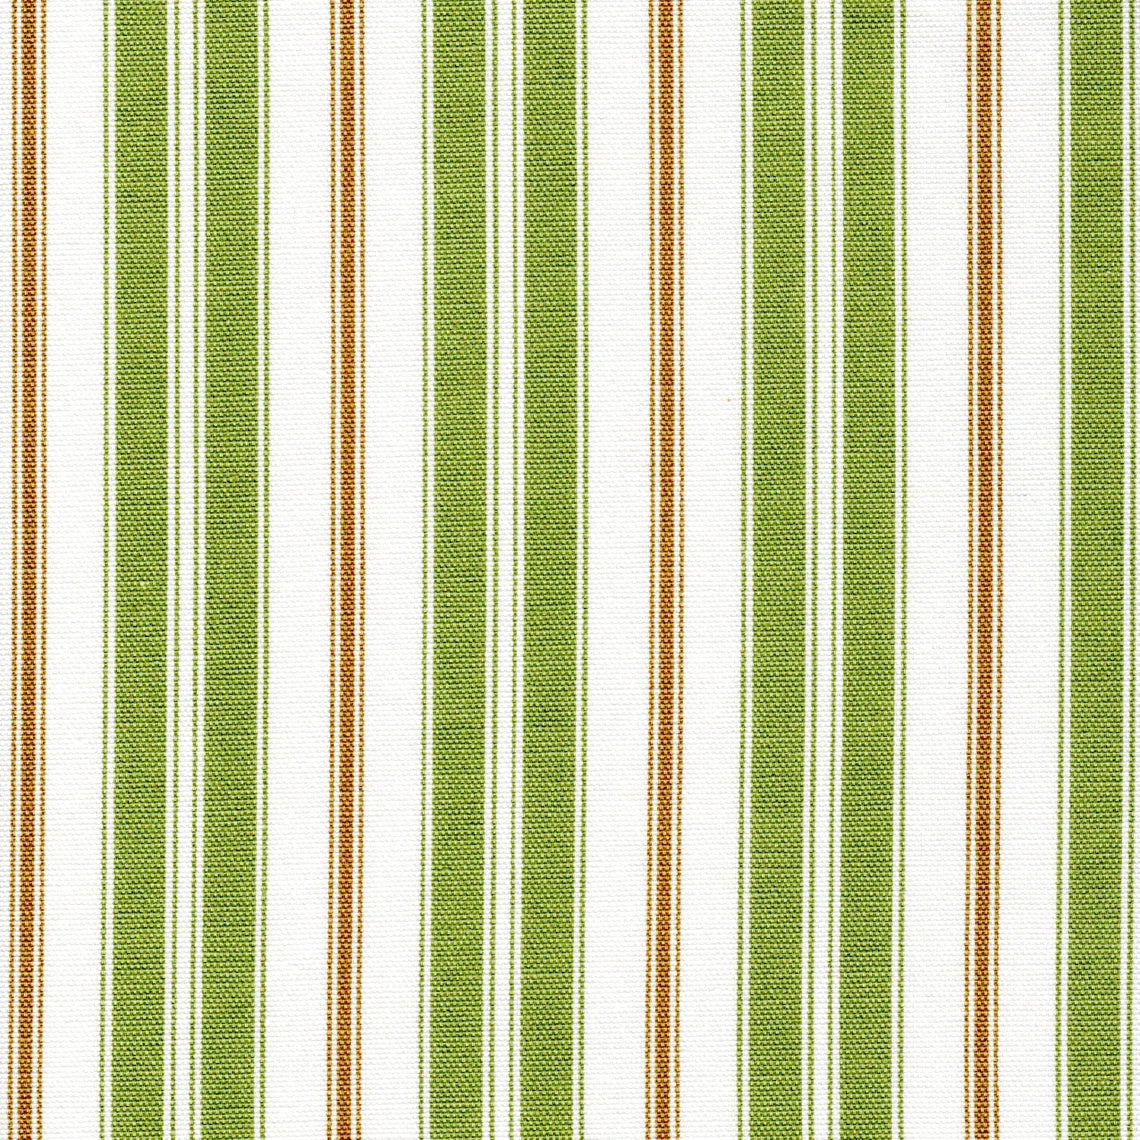 pinch pleated curtain panels pair in newbury aloe green stripe- green, brown, white